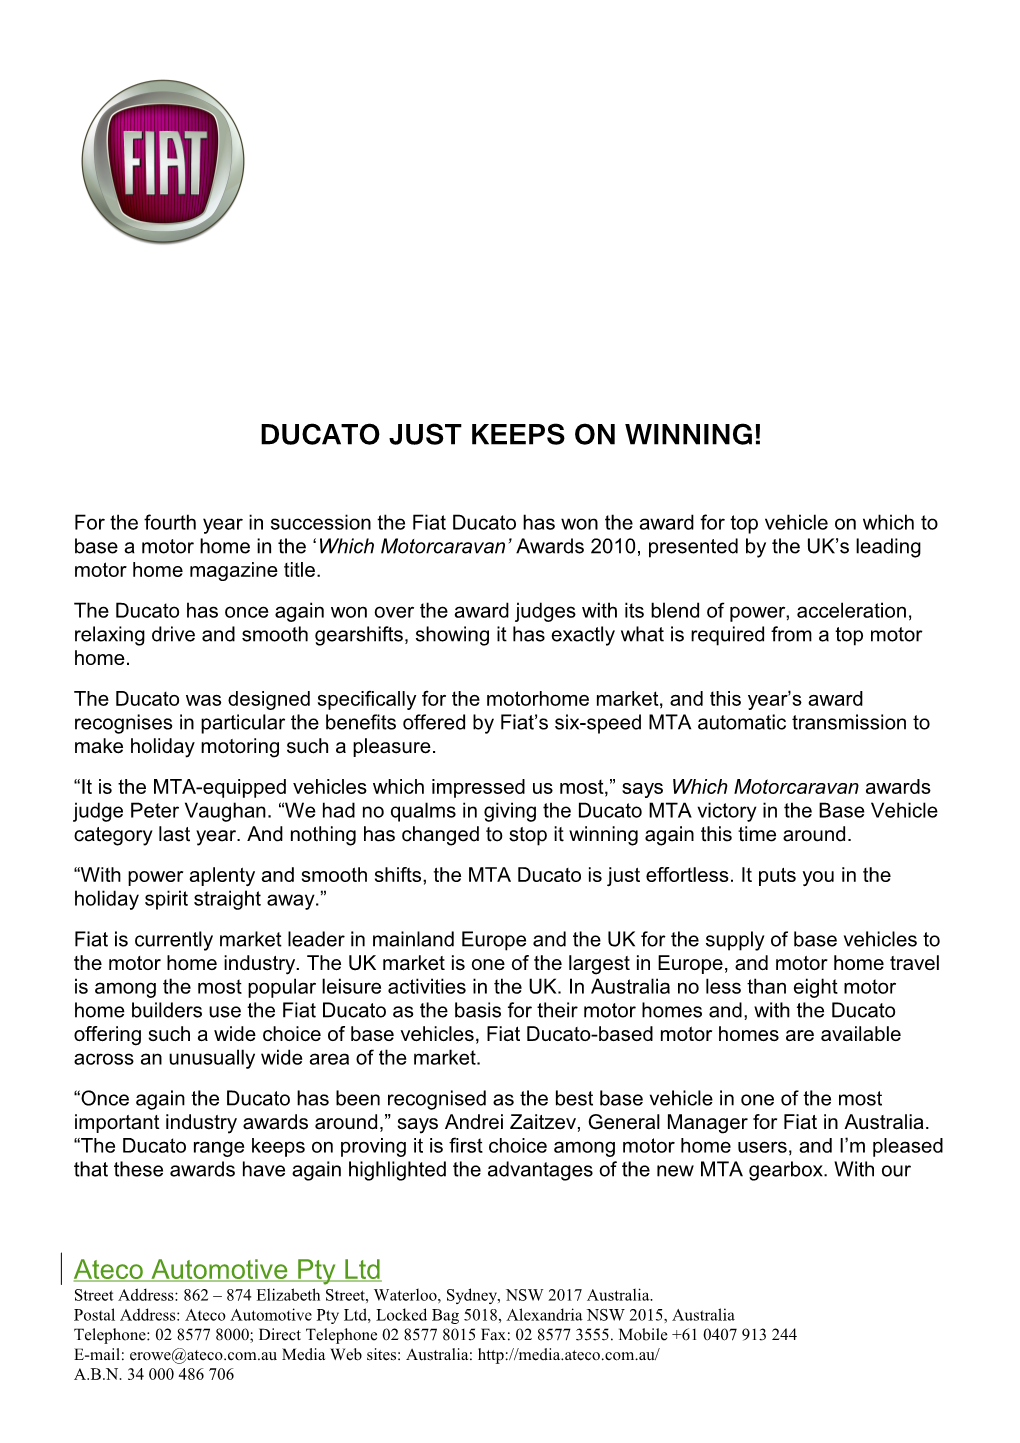 Ducato Just Keeps on Winning!